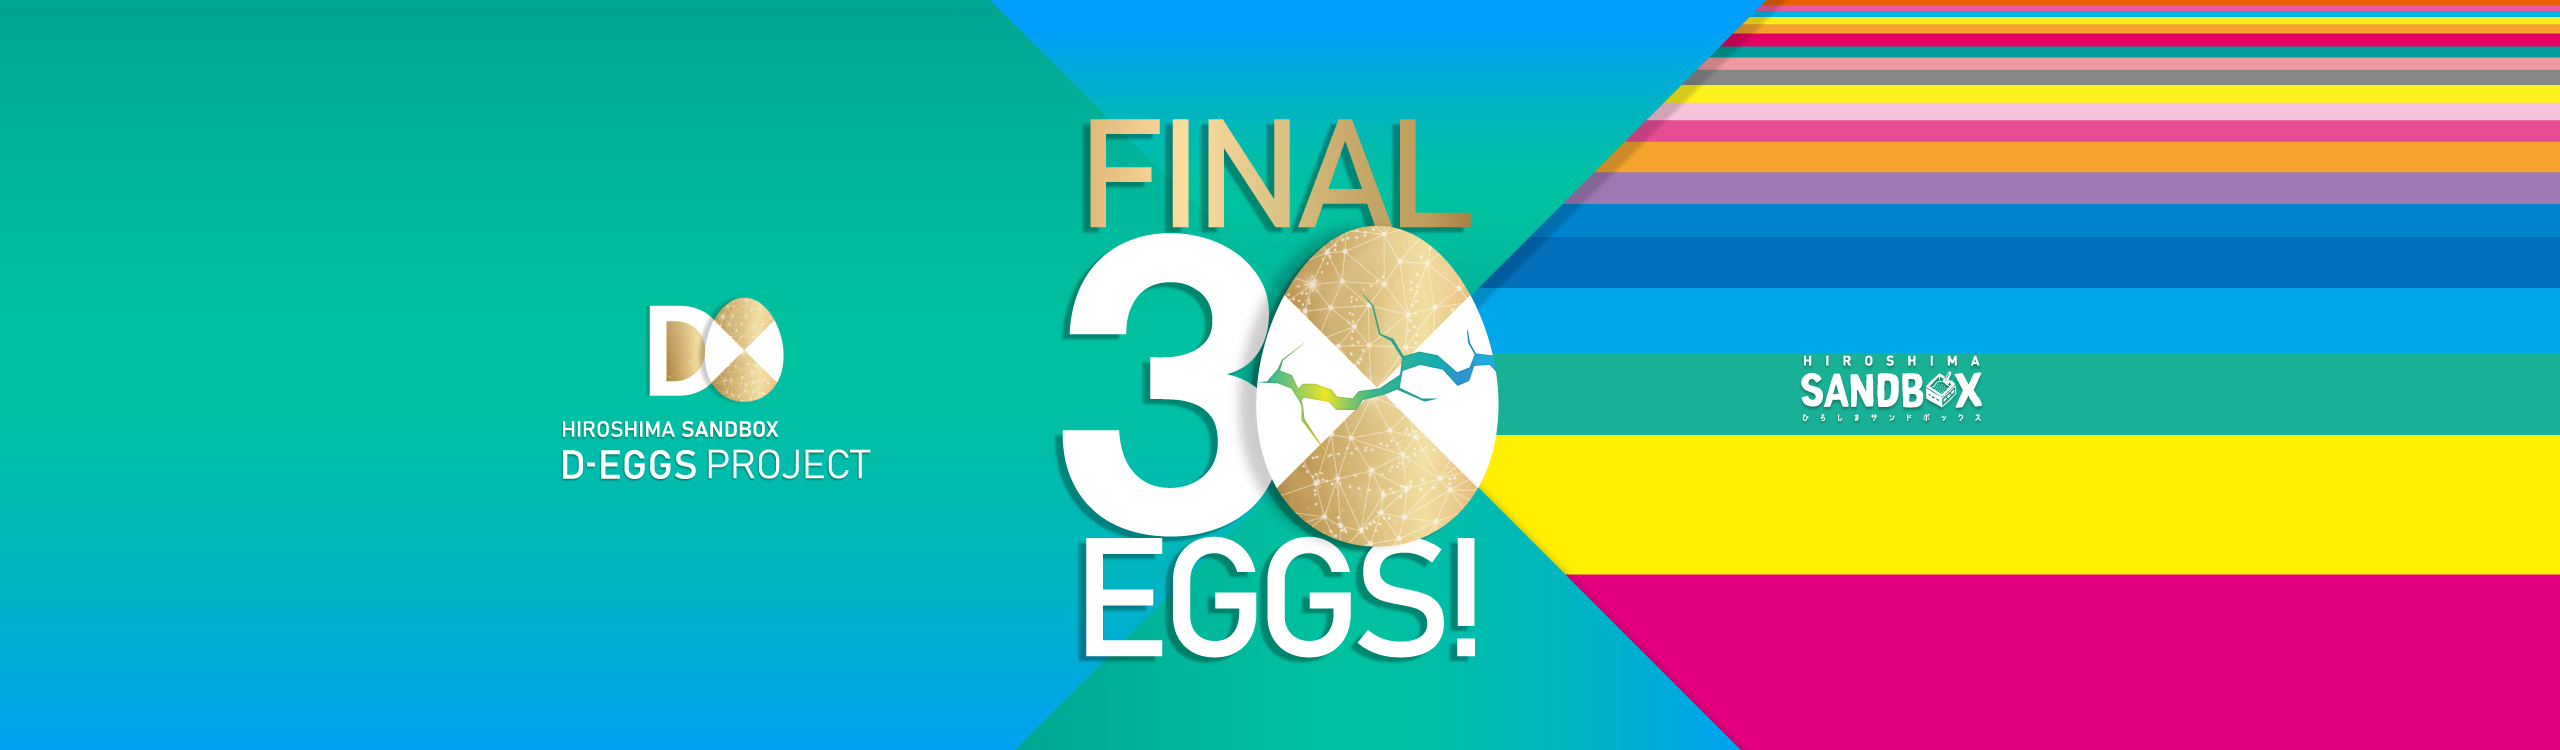 final 30 eggs